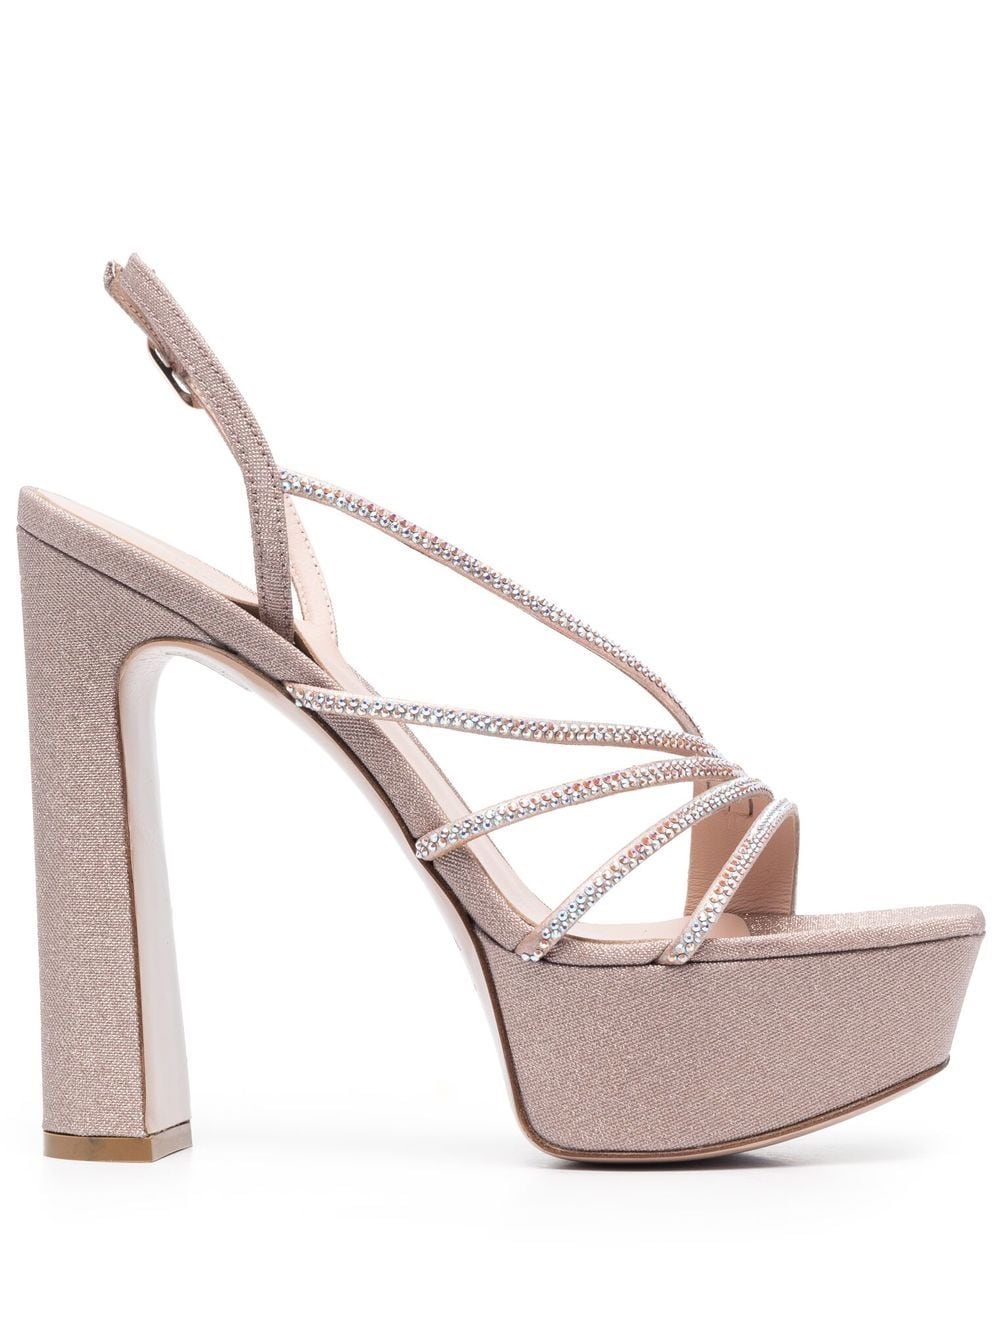 Le Silla Scarlet 150mm platform sandals - Pink von Le Silla